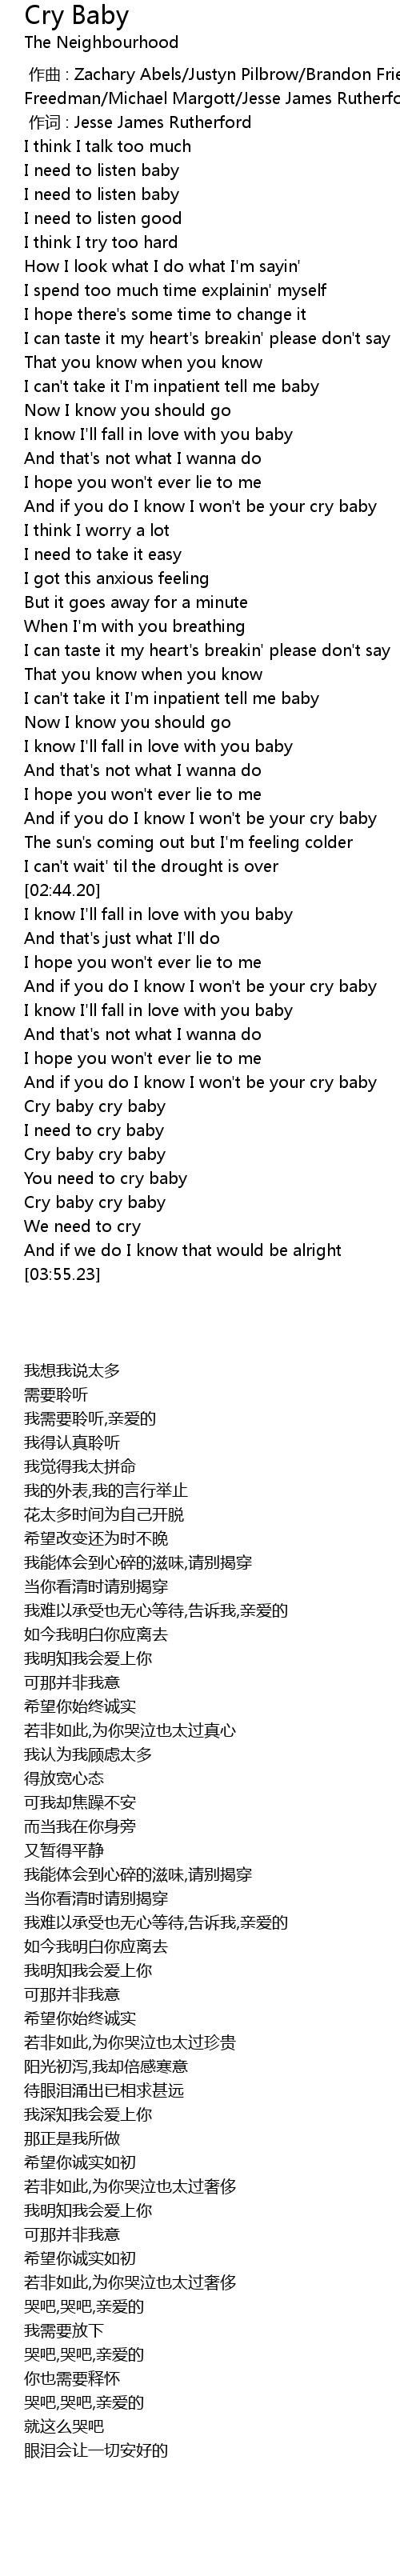 Crybaby lyrics